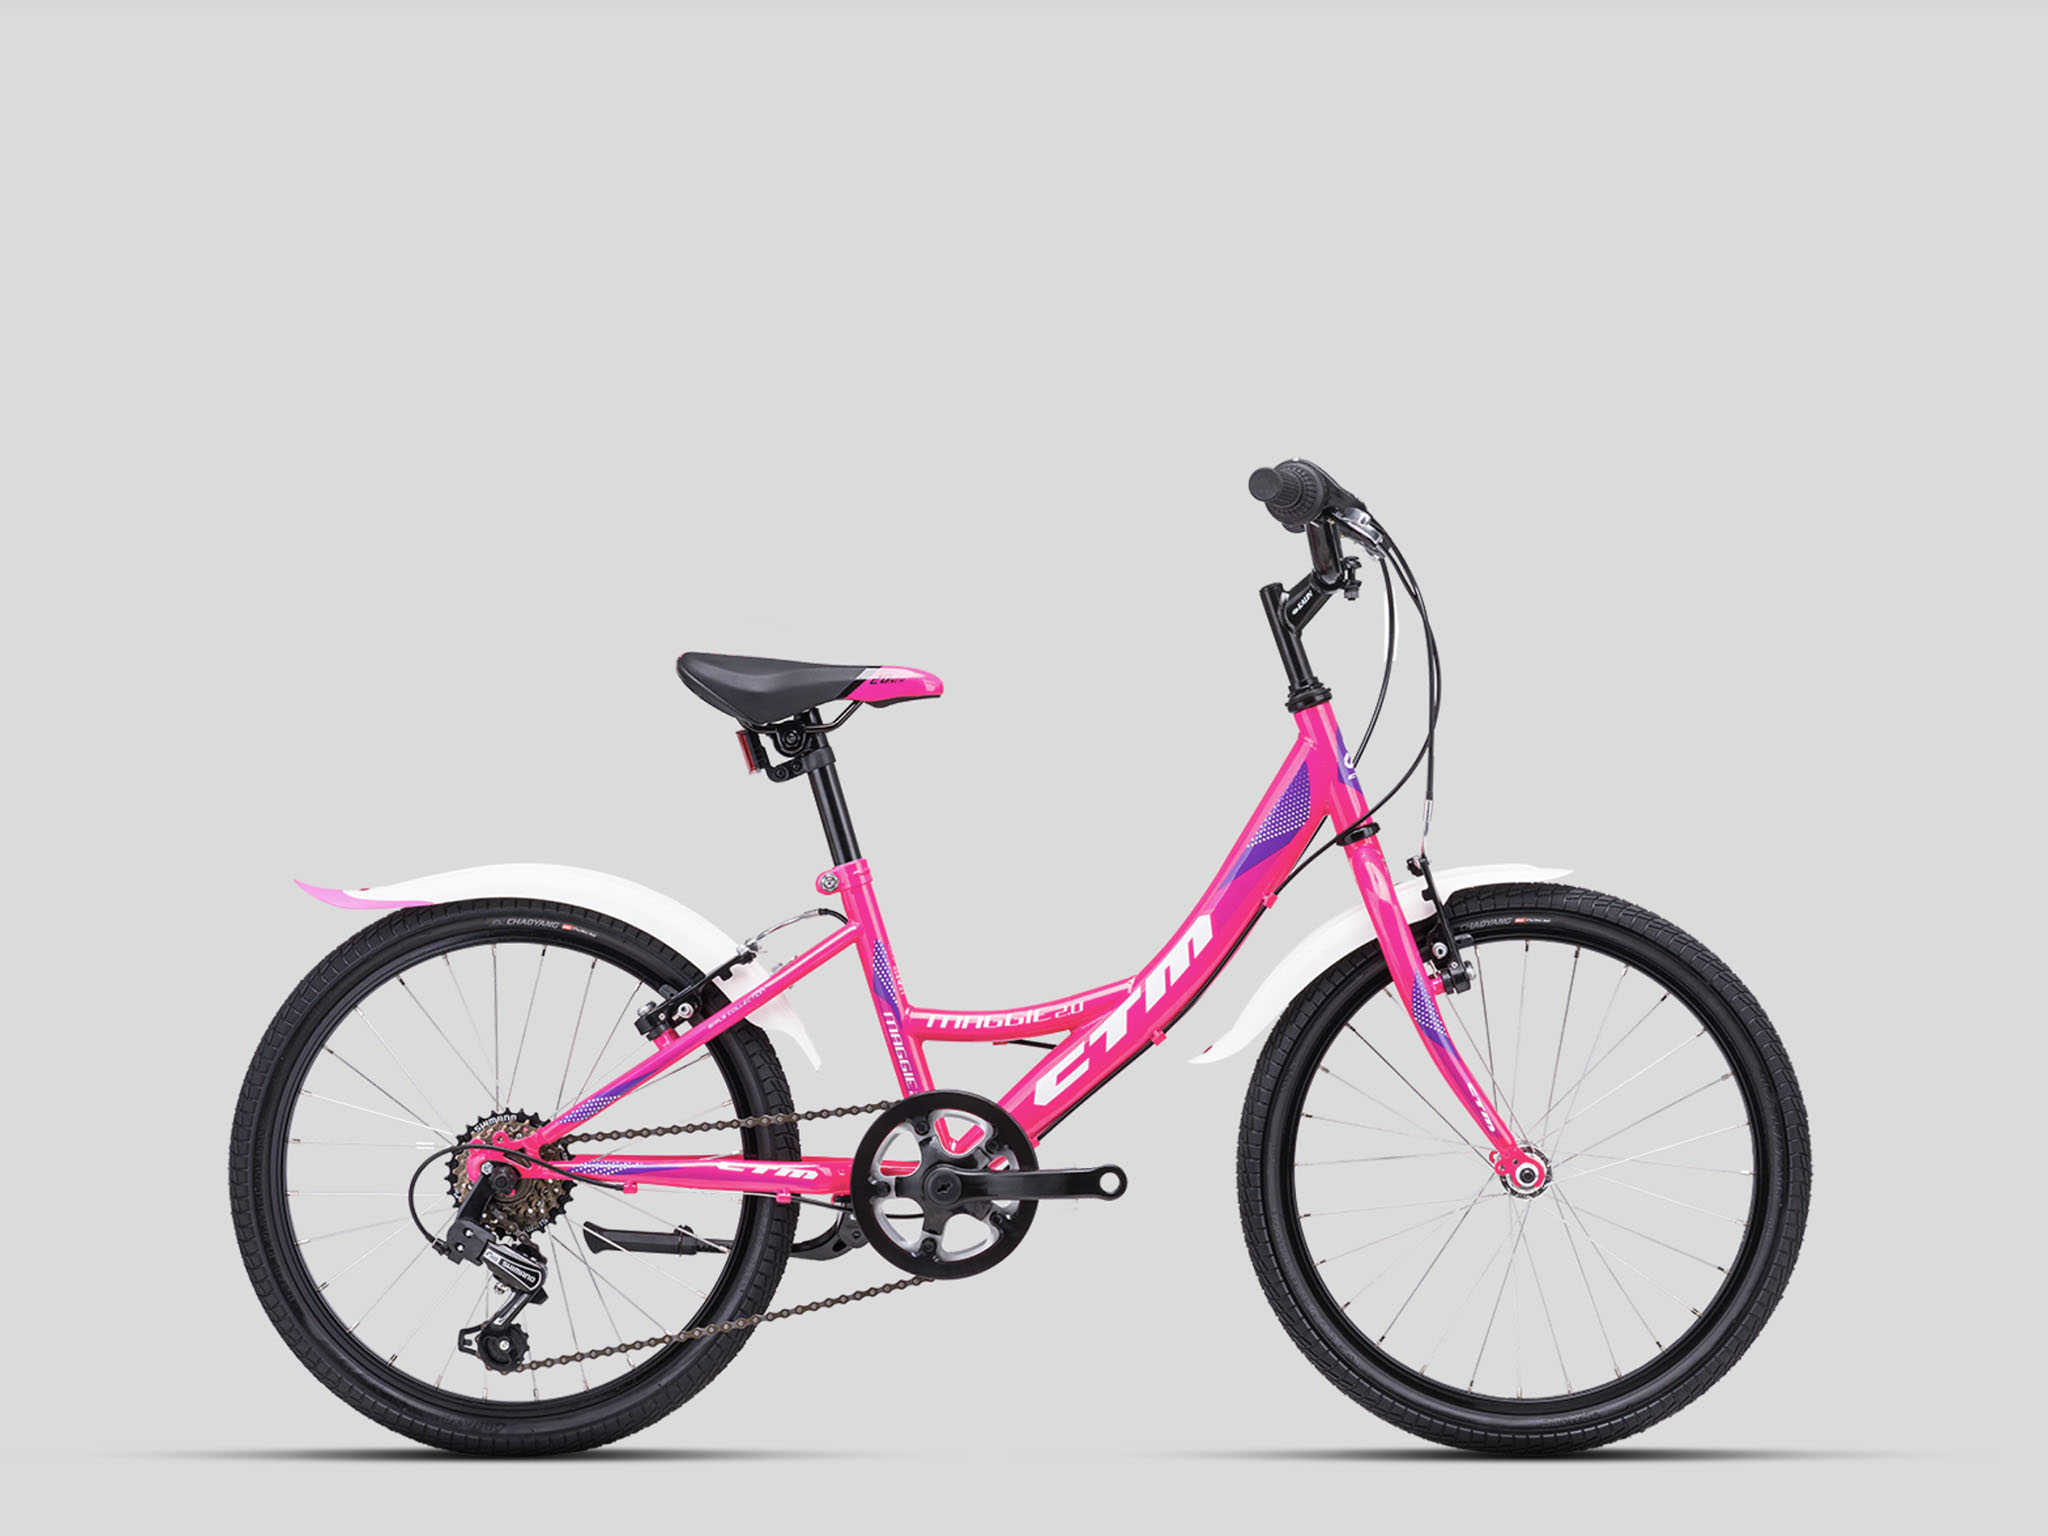 Bērnu velosipēds CTM Maggie 2.0 rozā lillā 20 collu velosipēds